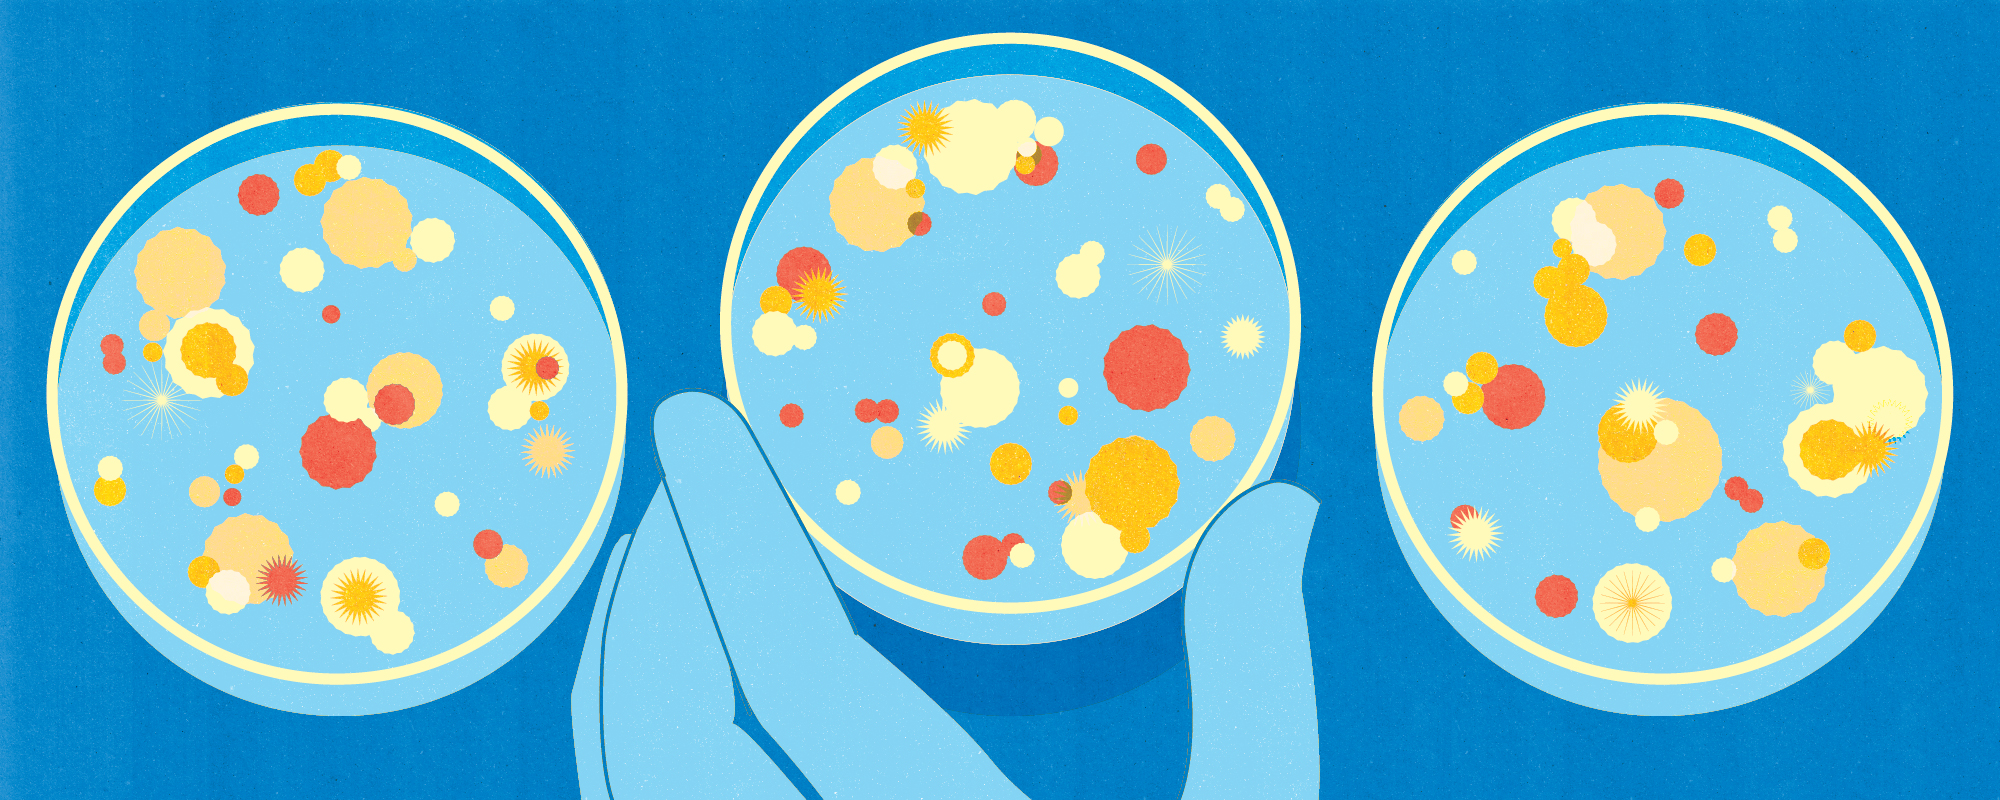 Illustration of petri dishes